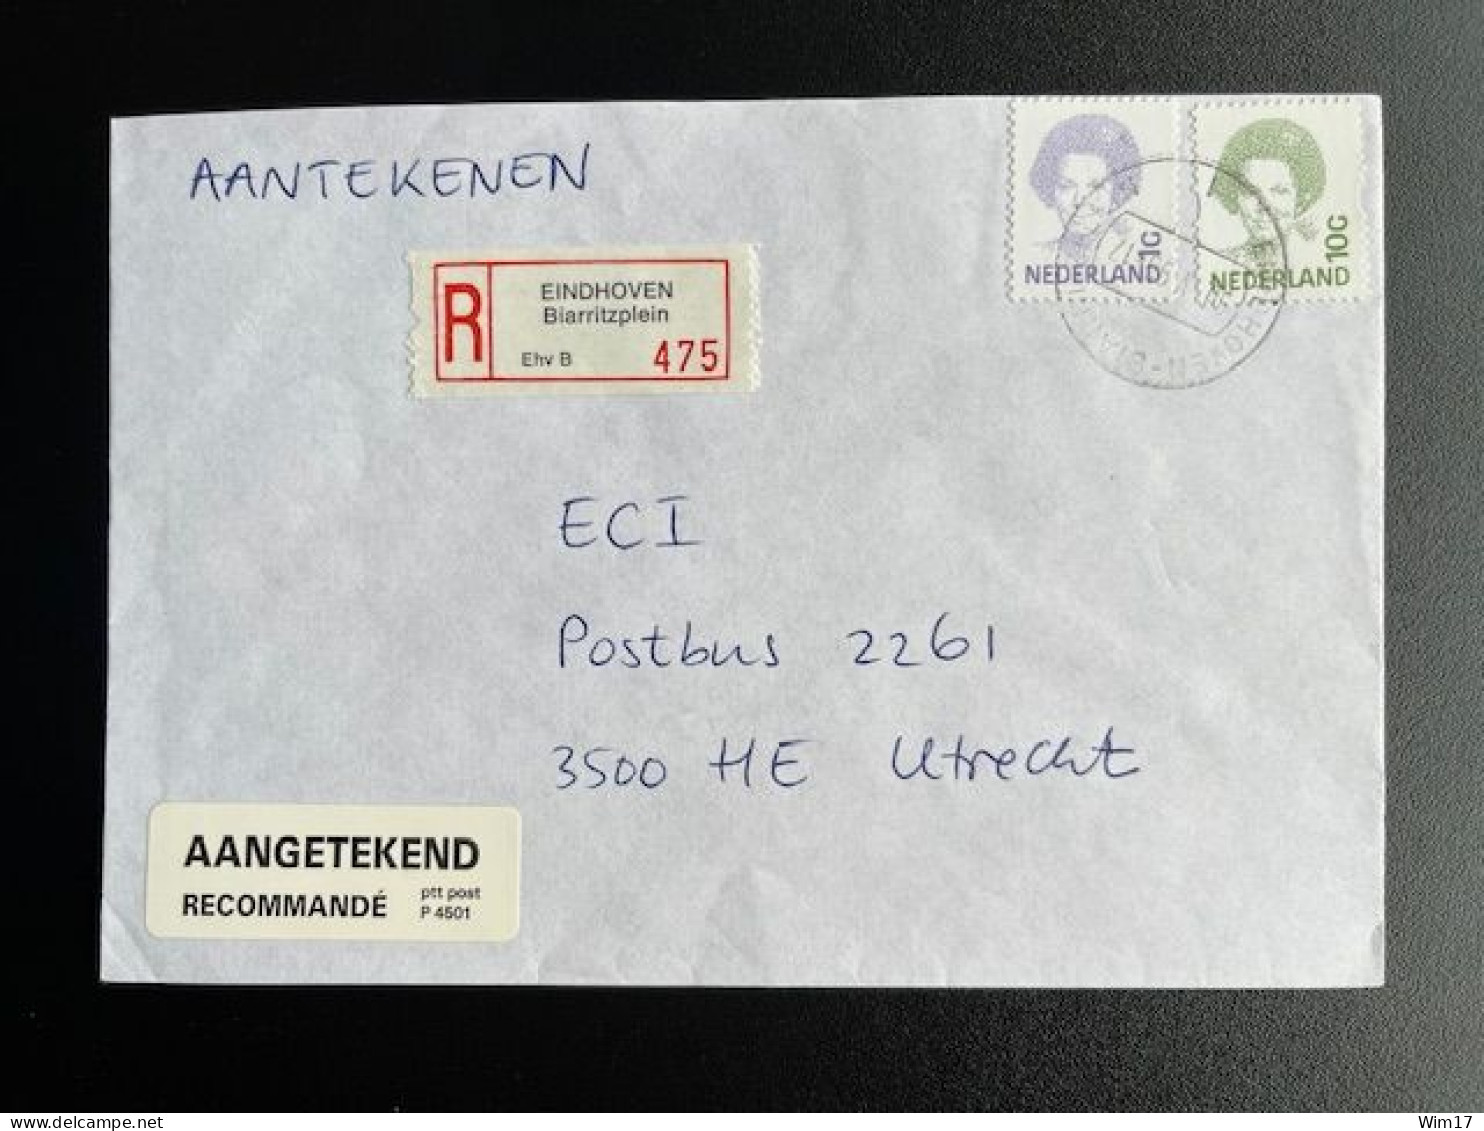 NETHERLANDS 1995 REGISTERED LETTER EINDHOVEN BIARRITZPLEIN TO UTRECHT 30-05-1995 NEDERLAND AANGETEKEND - Lettres & Documents